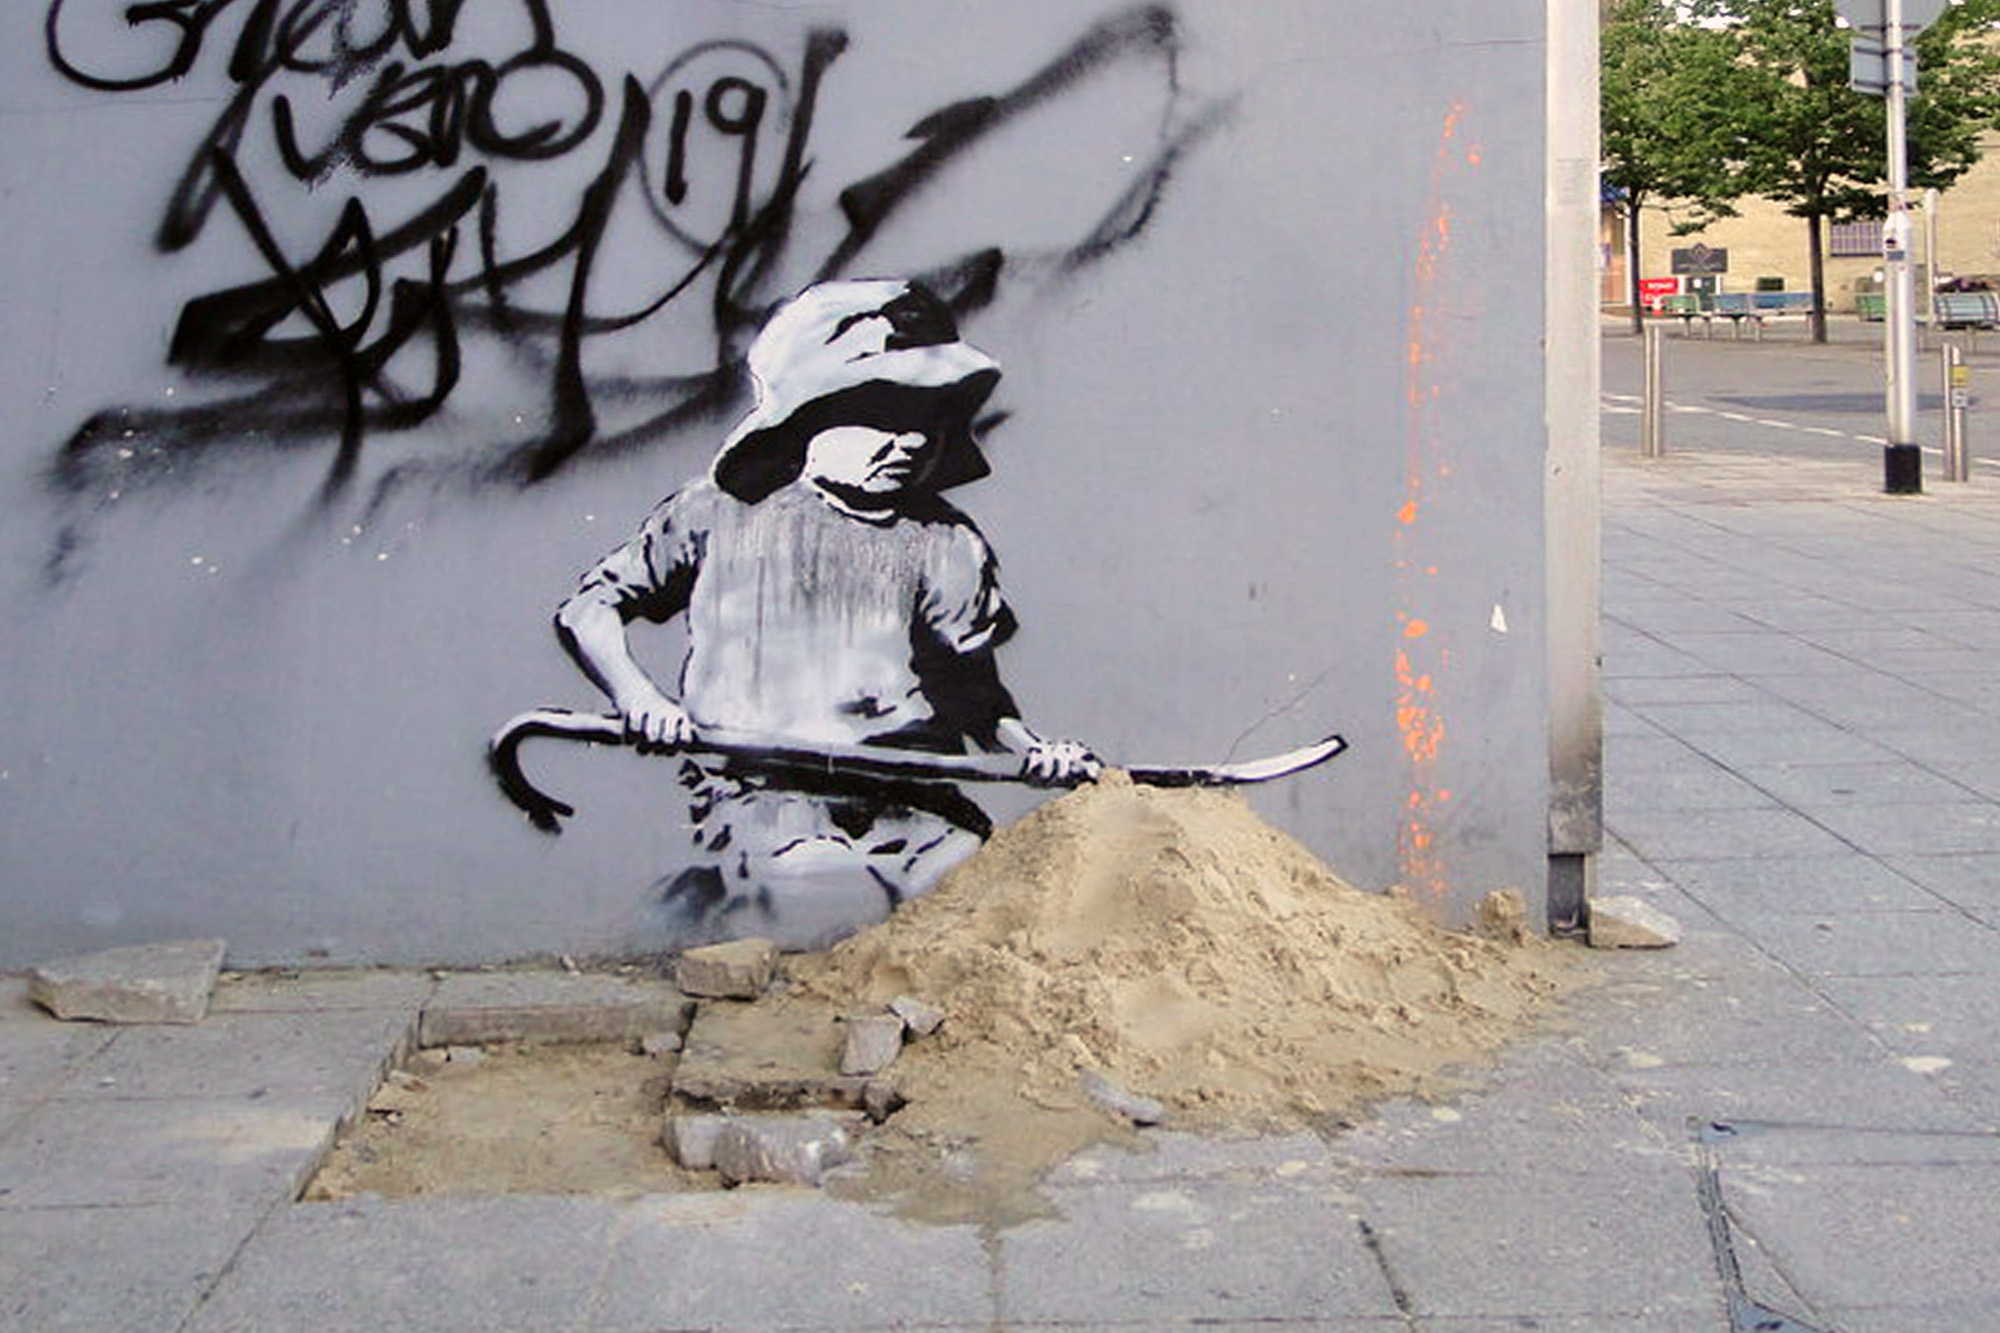 Il video di Banksy, “A Great British Spraycation”